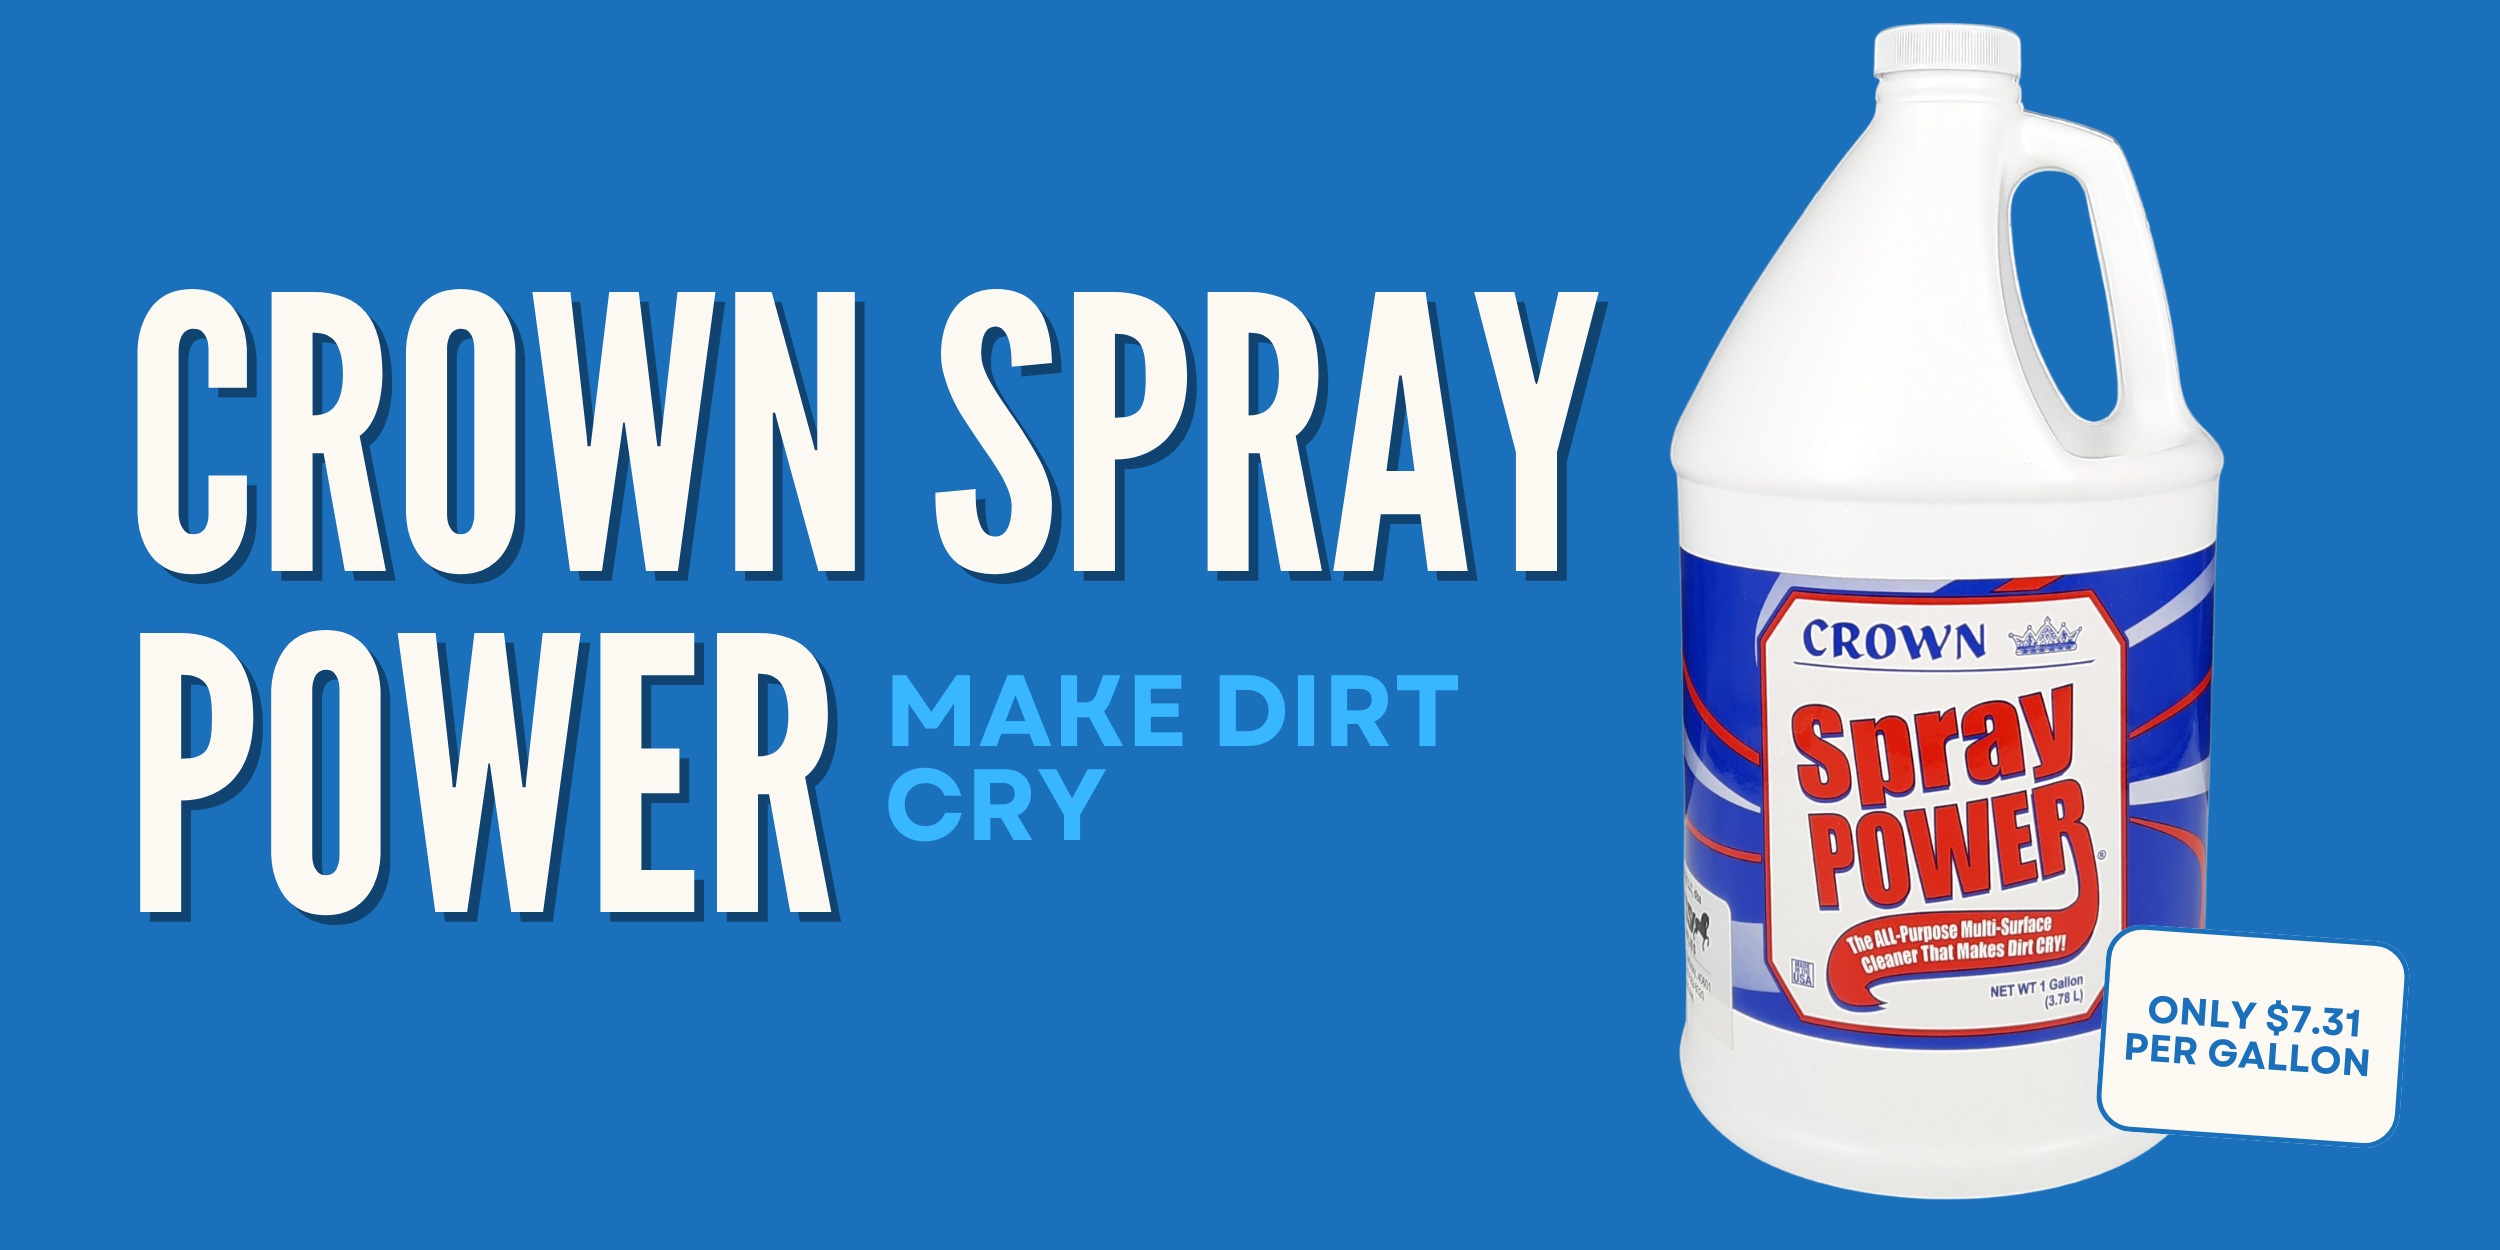 Crown Spray Power